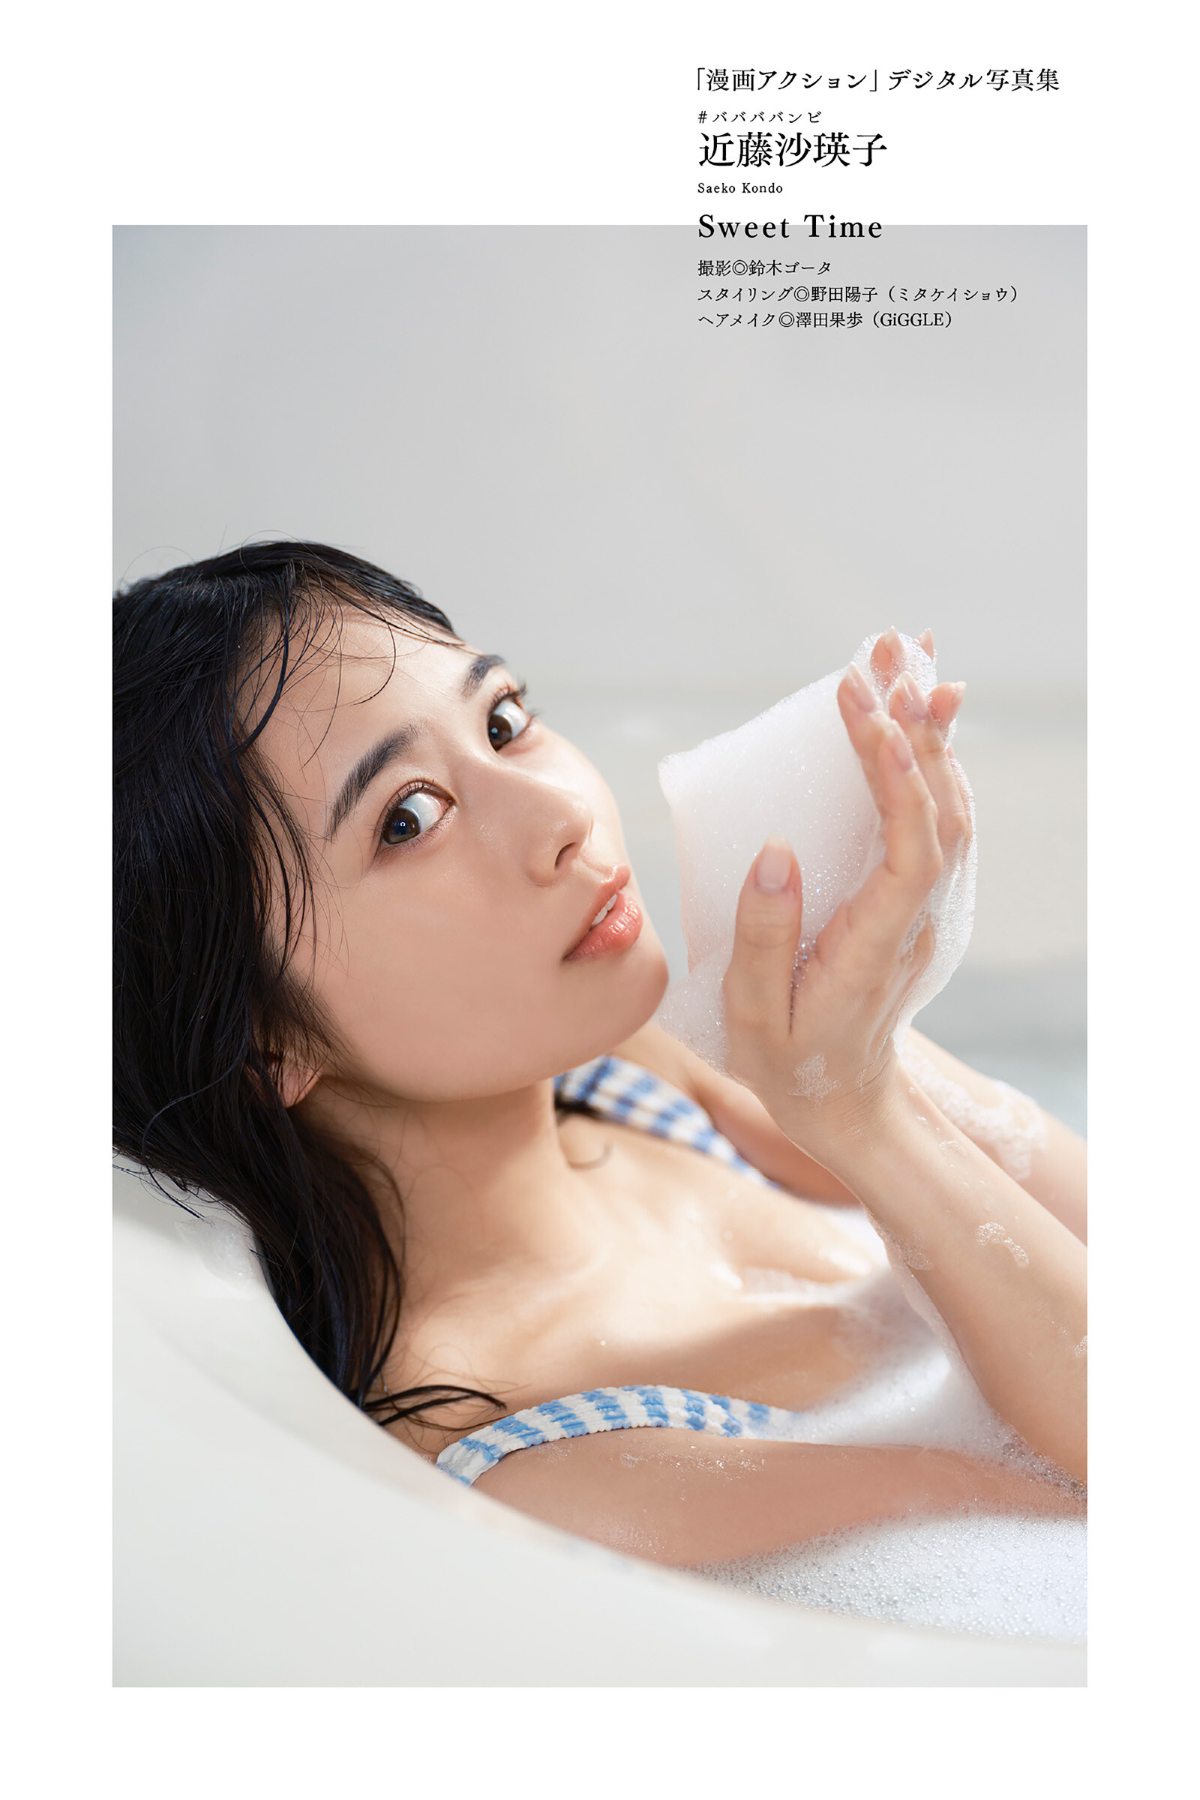 Manga Action Photobook Saeko Kondo 近藤沙瑛子 Sweet Time 2022 07 19 0045 0674805122.jpg